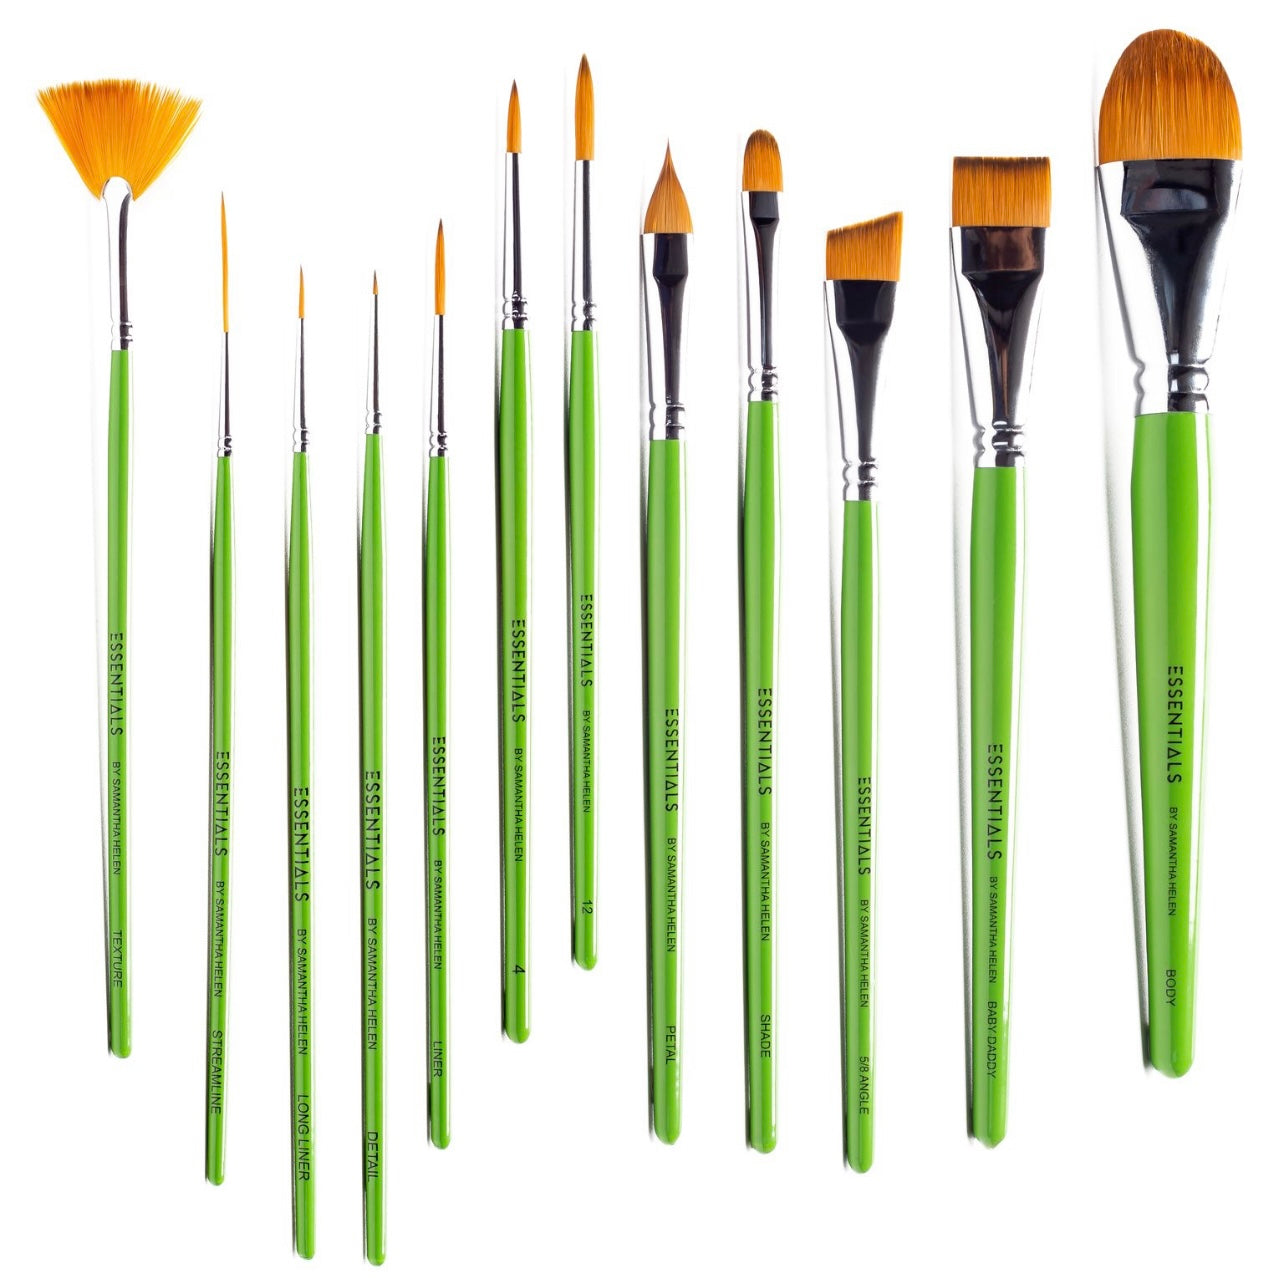 Pro Artistry Face & Body Paint Brush Set